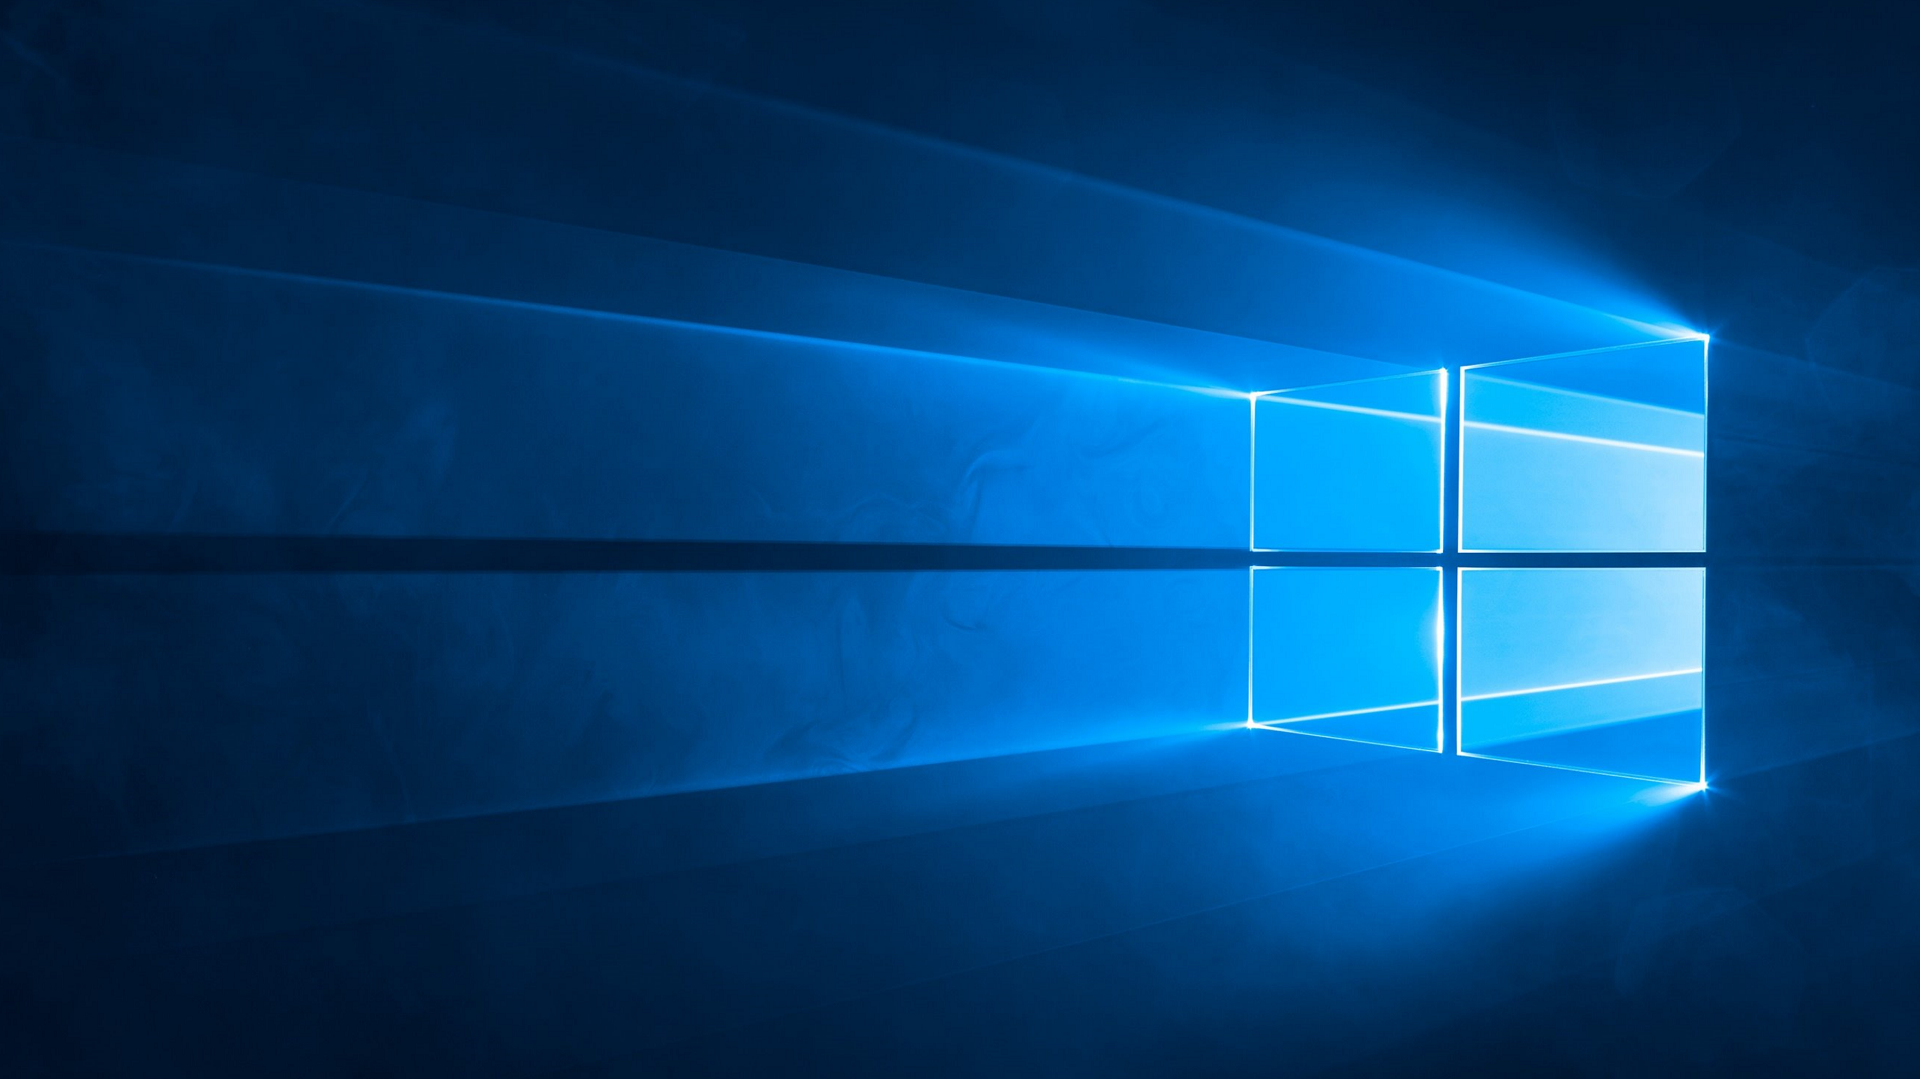 The default Windows 10 desktop image.